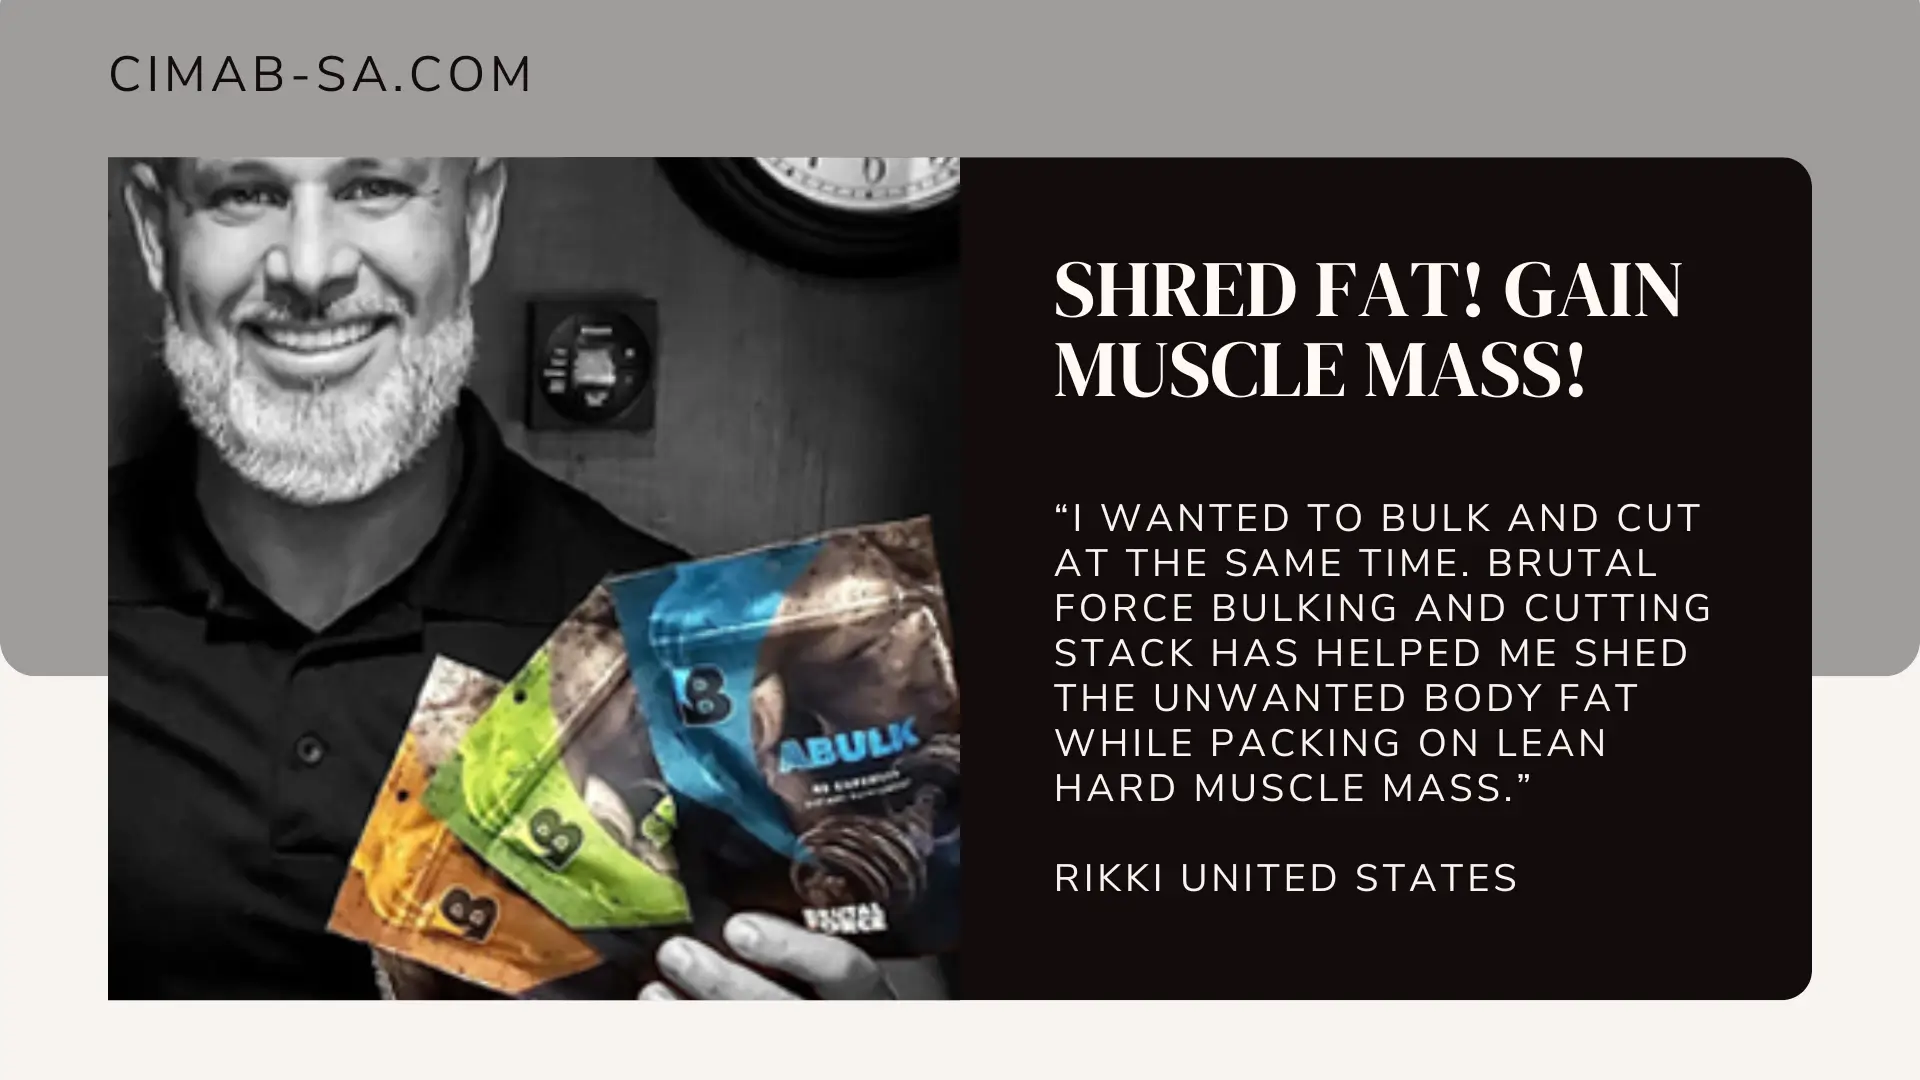 Shred fat gain muscle